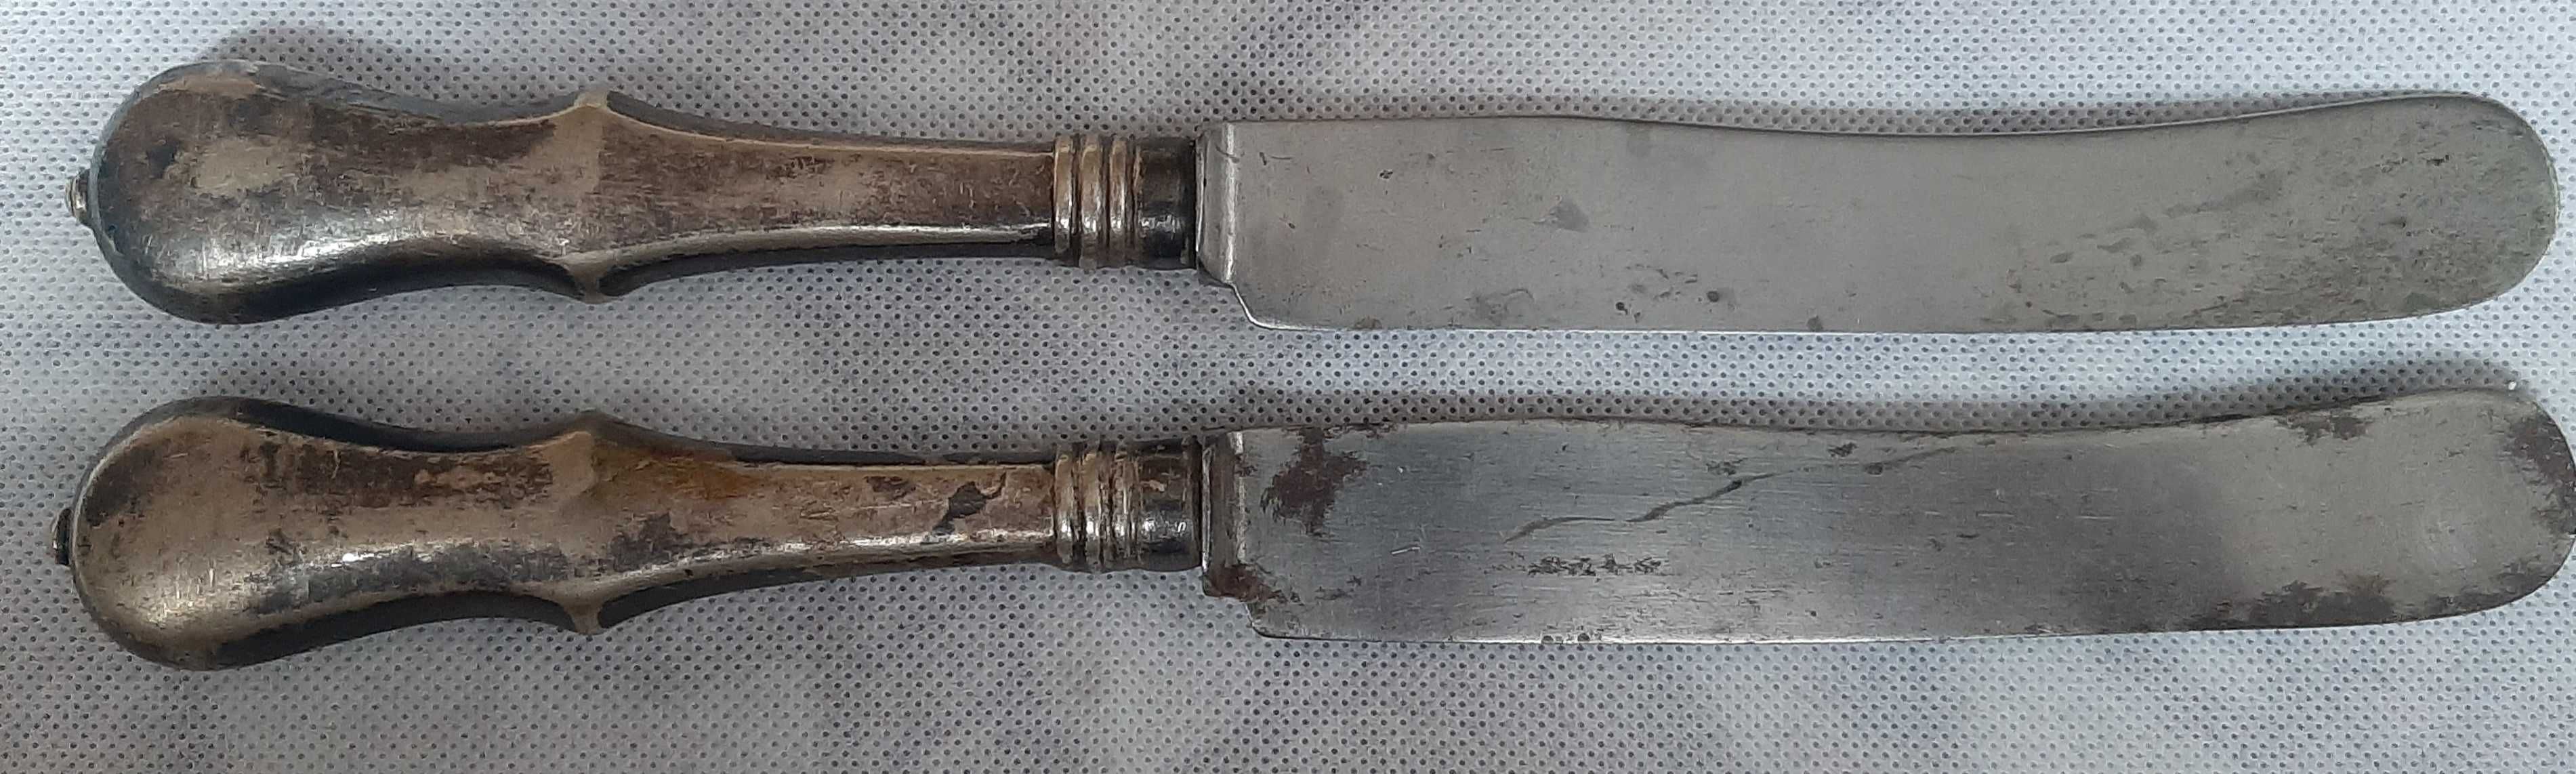 Stare noże M. Jarra Kraków XIX wiek